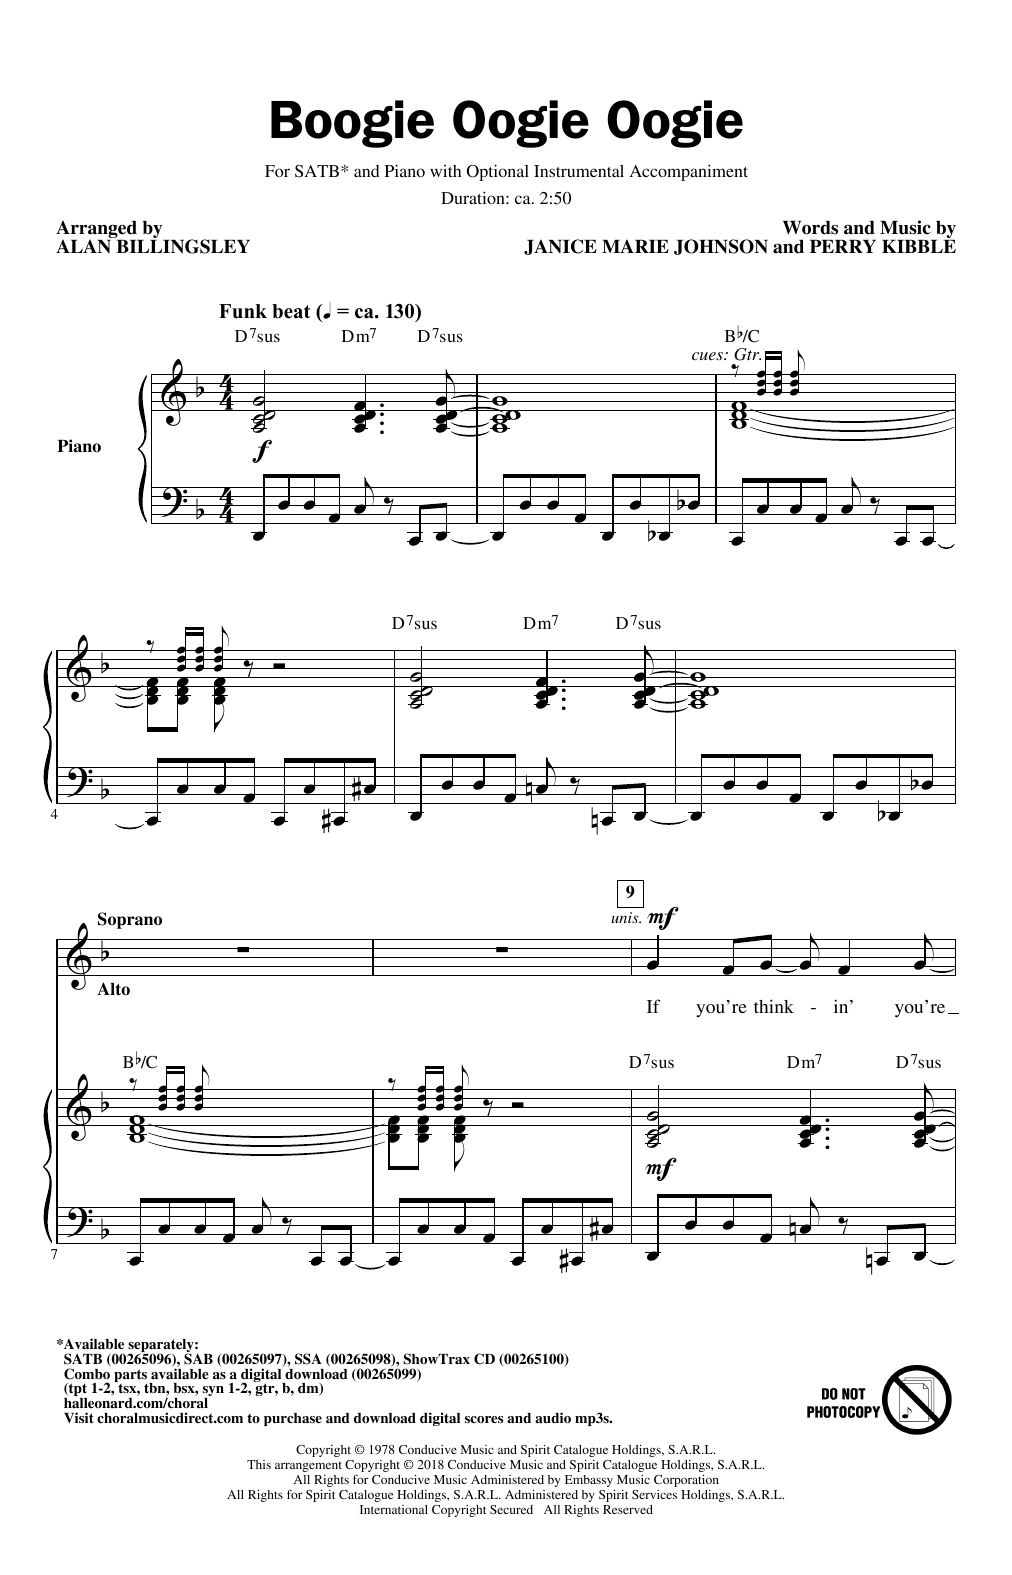 A Taste Of Honey Boogie Oogie Oogie (arr. Alan Billingsley) Sheet Music Notes & Chords for SSA - Download or Print PDF